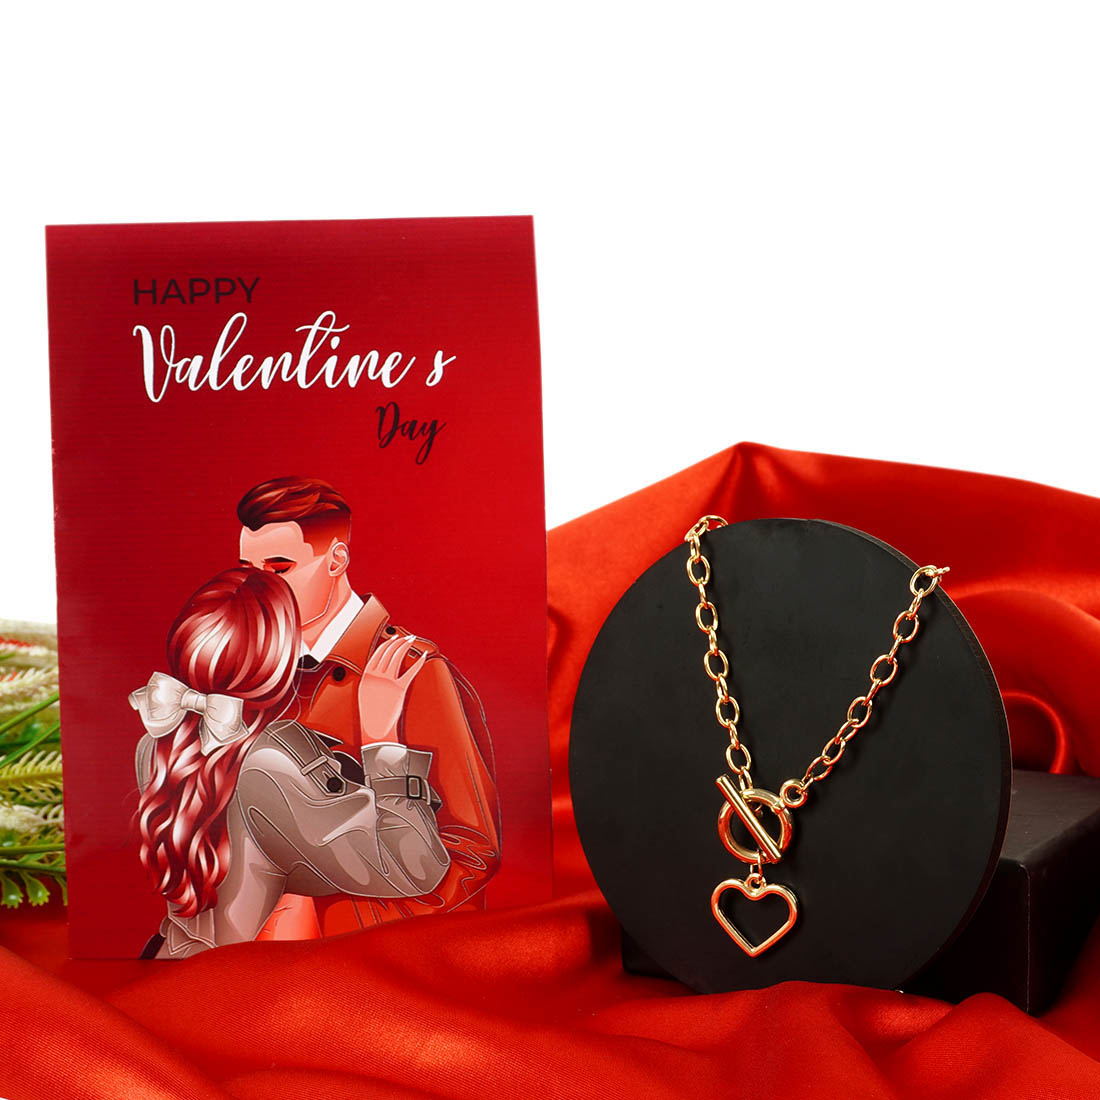 20 Virtual Valentine's Day Ideas - Mindy Weiss